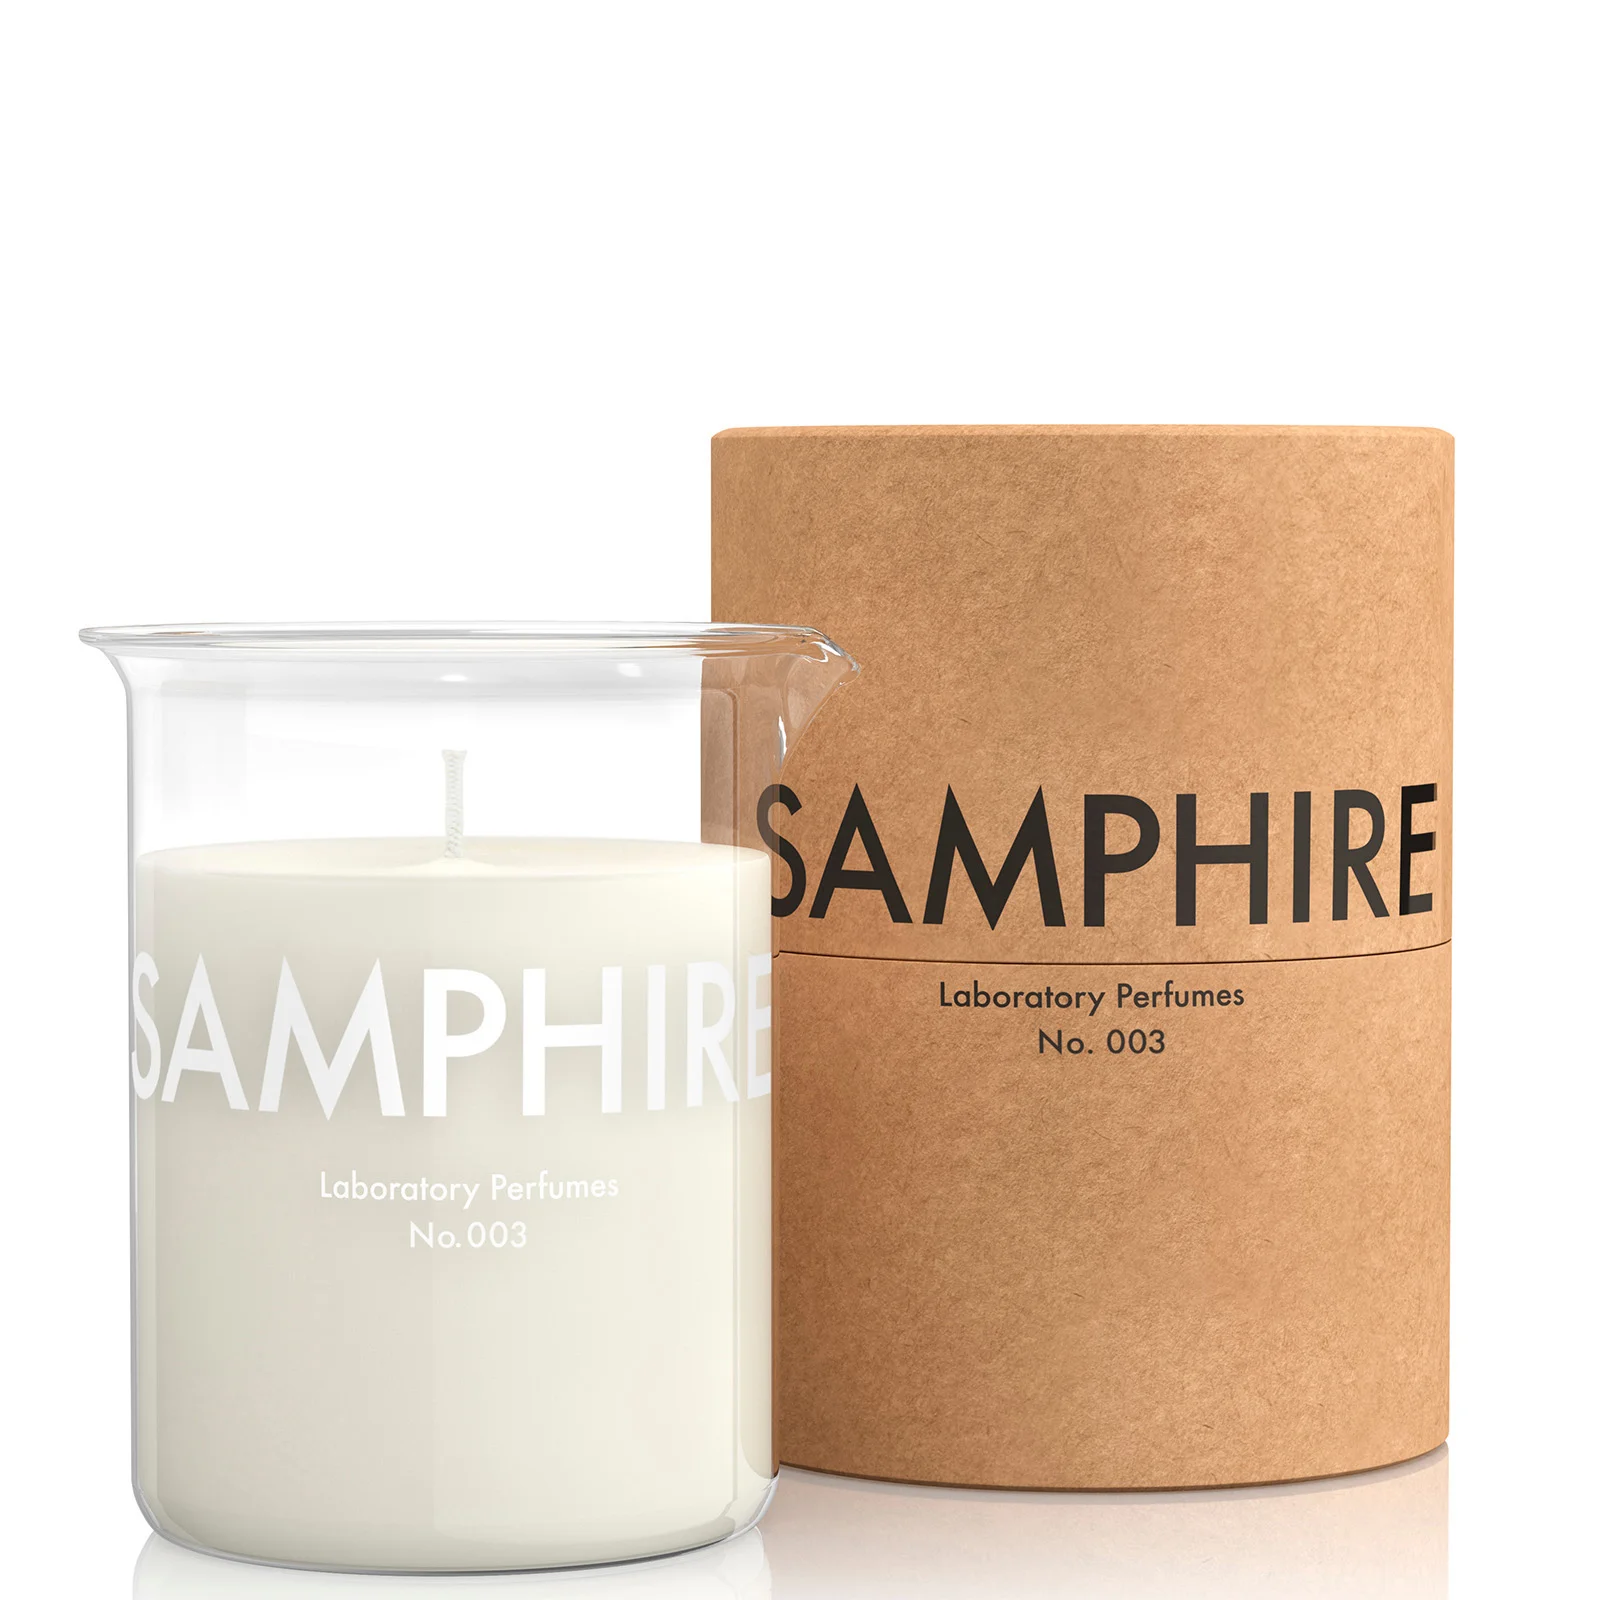 Laboratory Perfumes Samphire Candle 200g Image 1